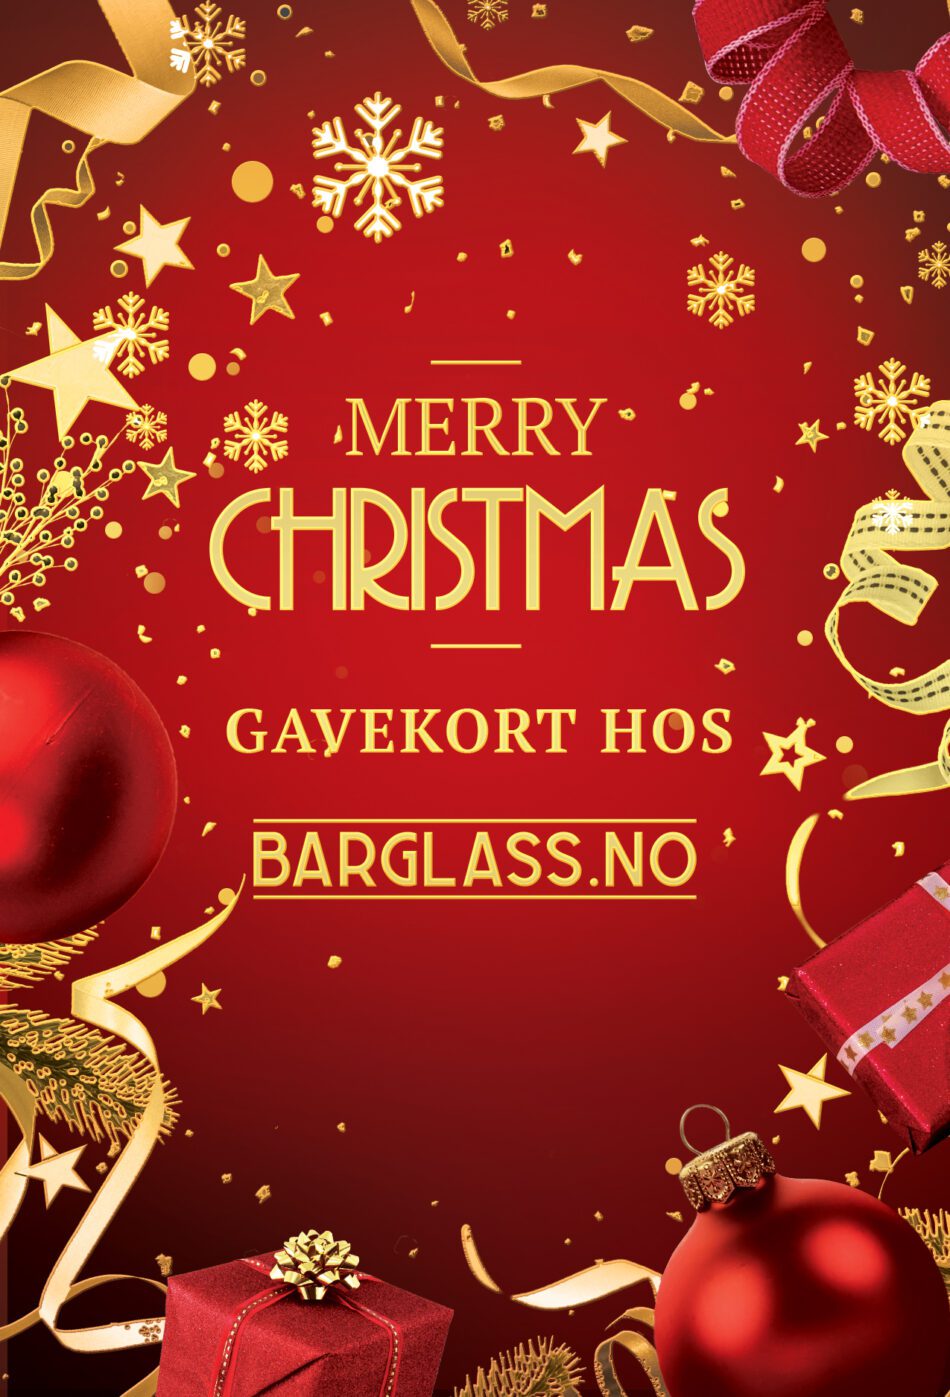 Merry Christmas Gavekort hos Barglass